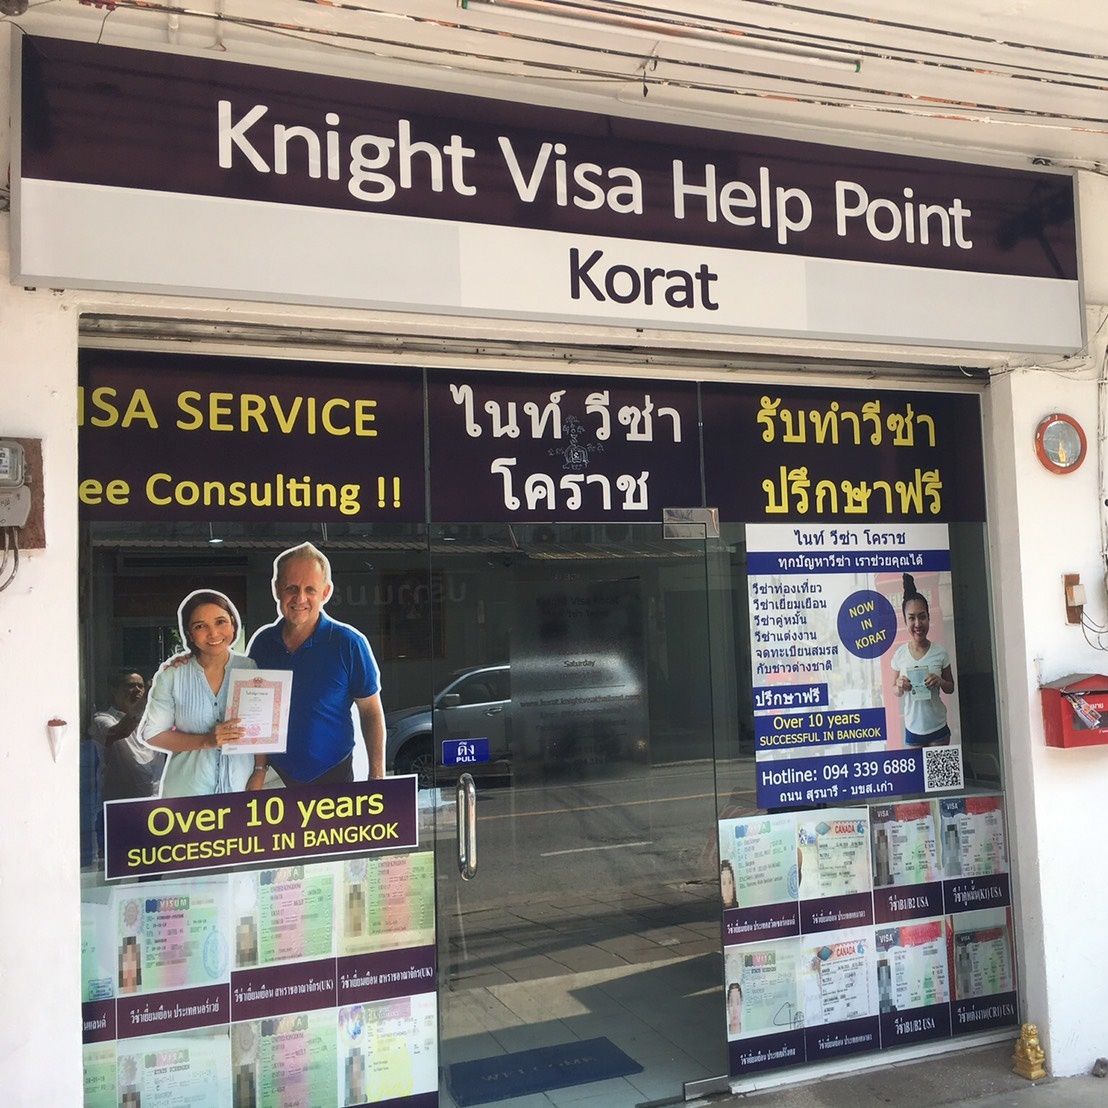 Knight Visa Help Point (Korat)